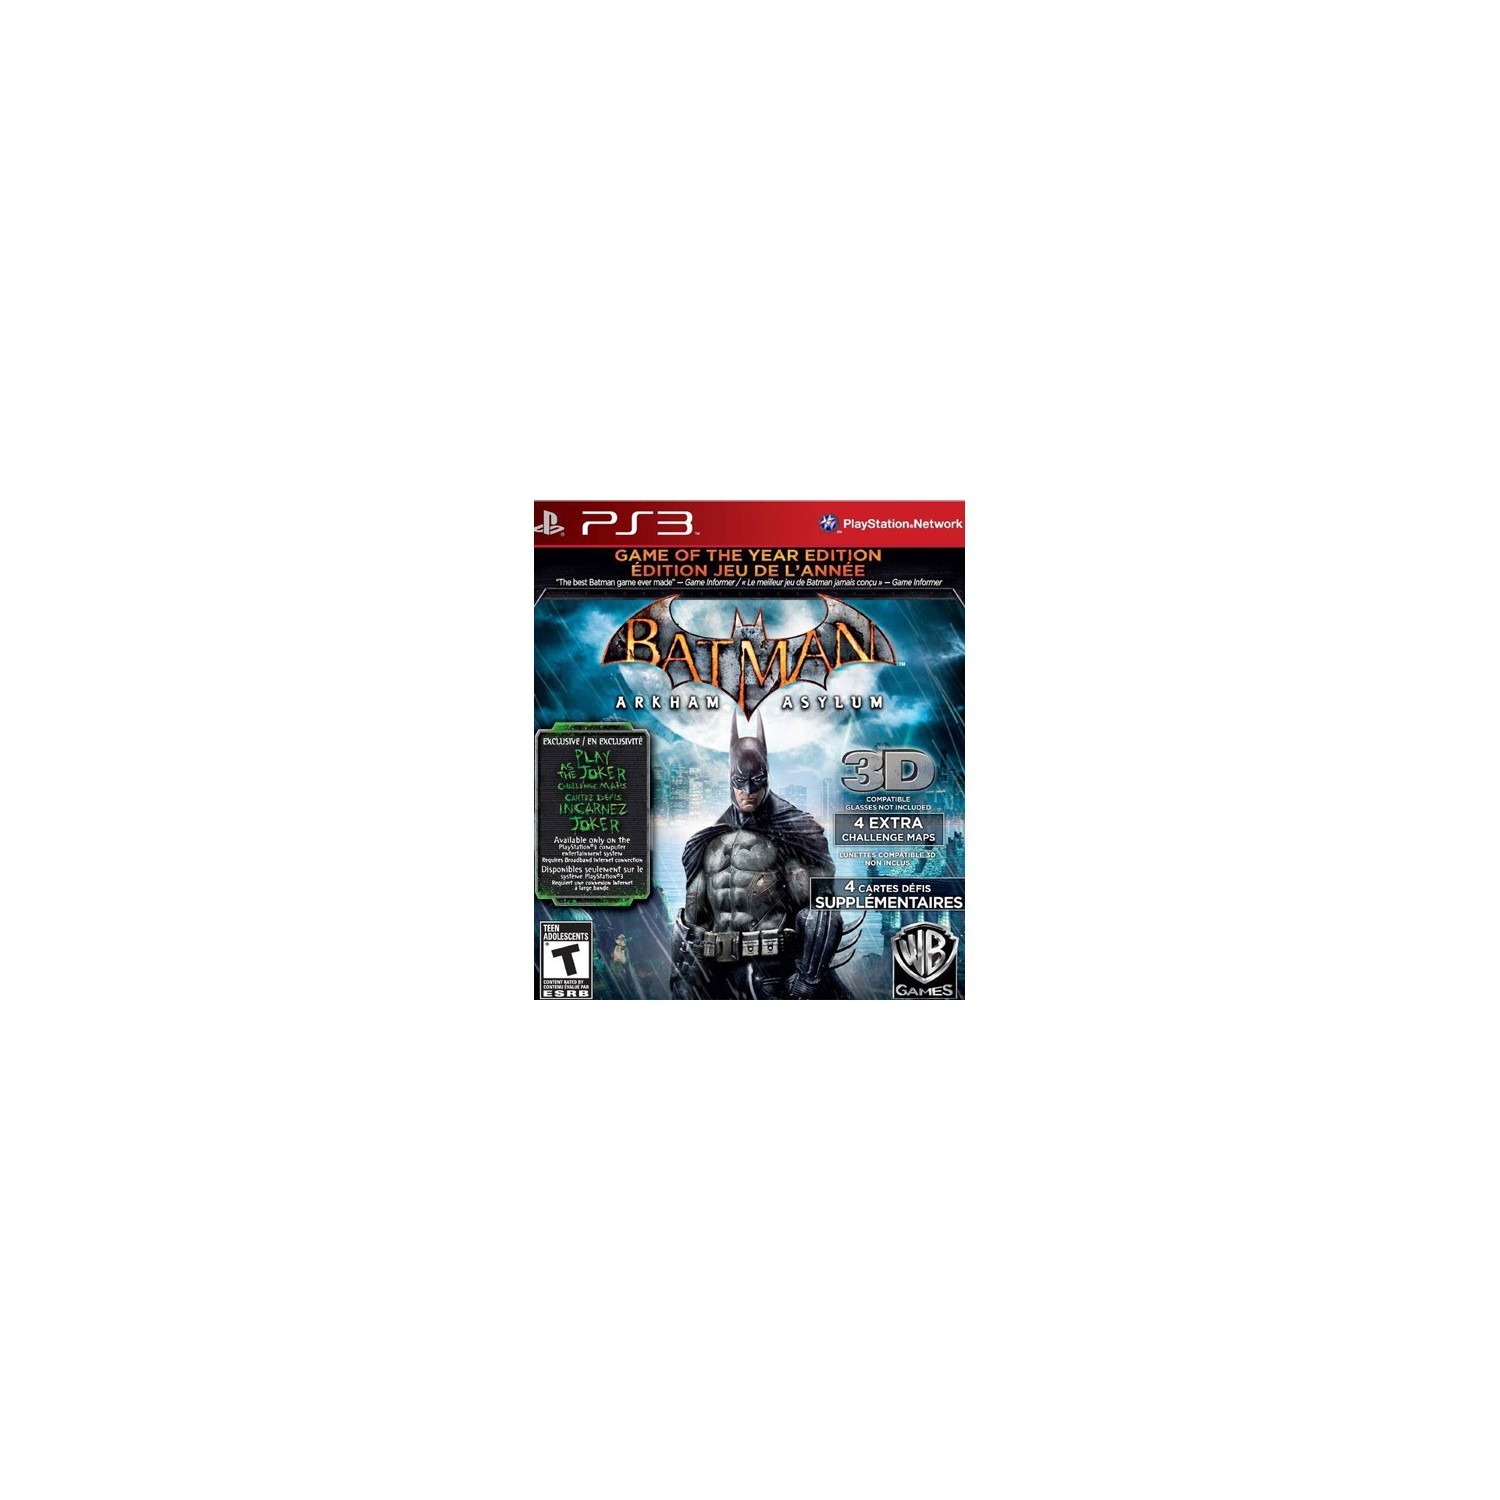 Batman Arkham Asylum Game of the Year Edition (PS3)